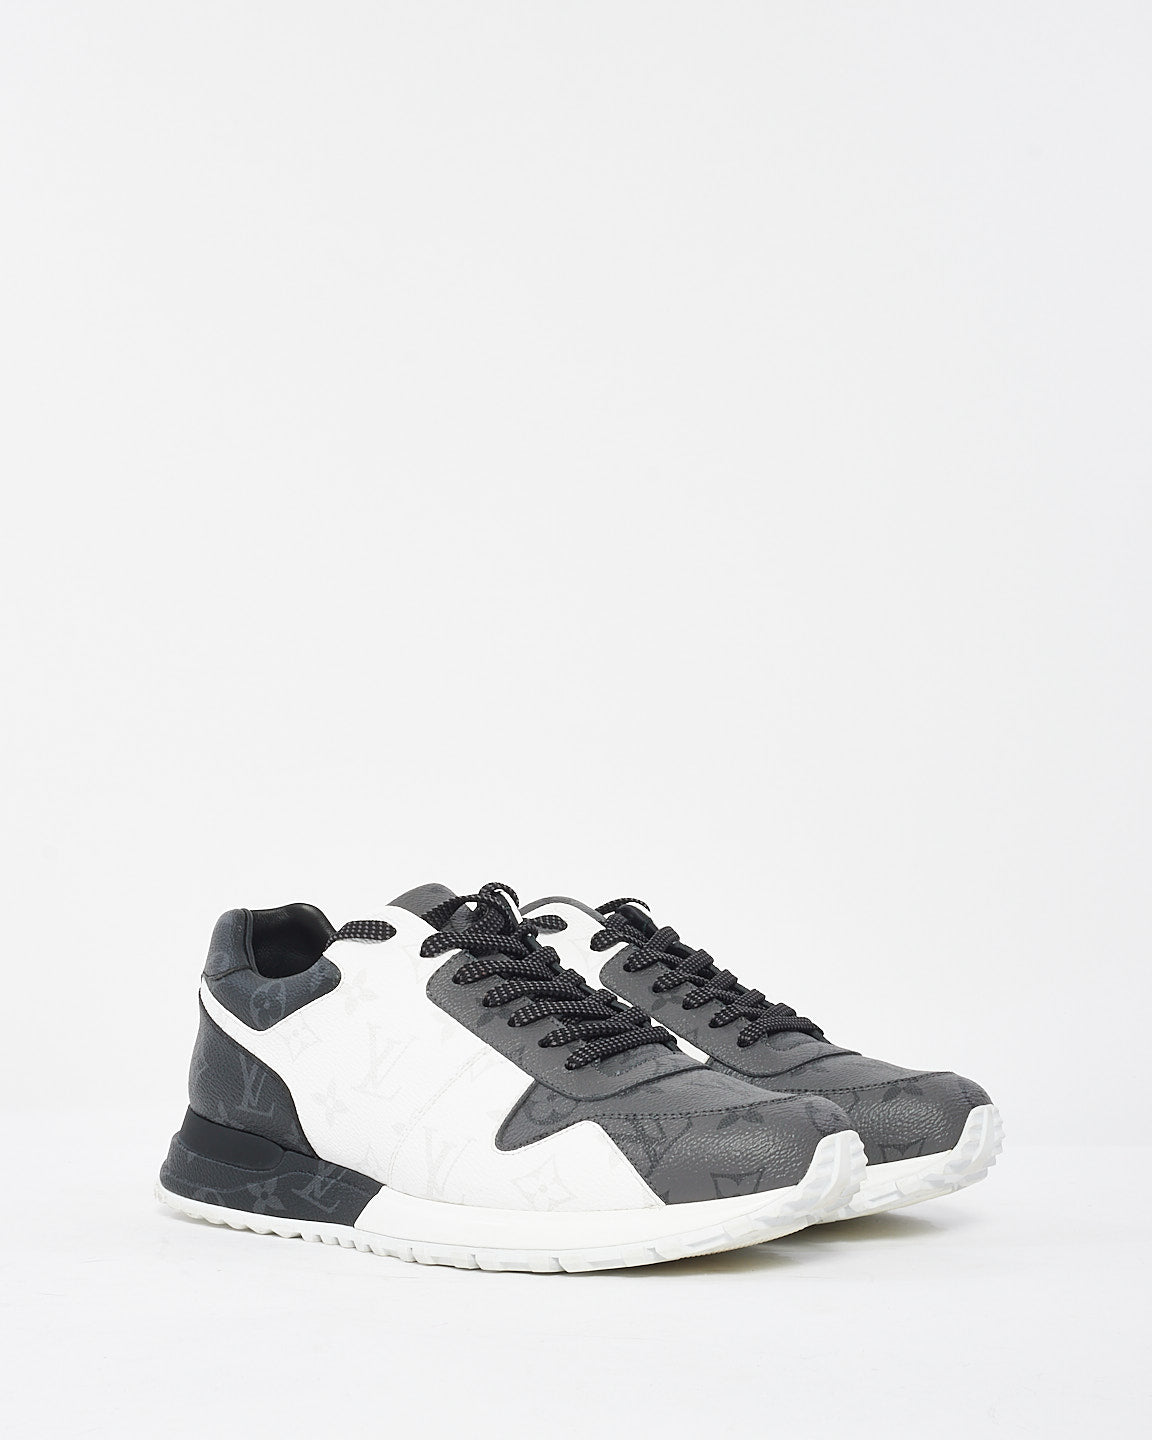 Louis Vuitton Men's Black & White Monogram Runaway Sneakers - 7